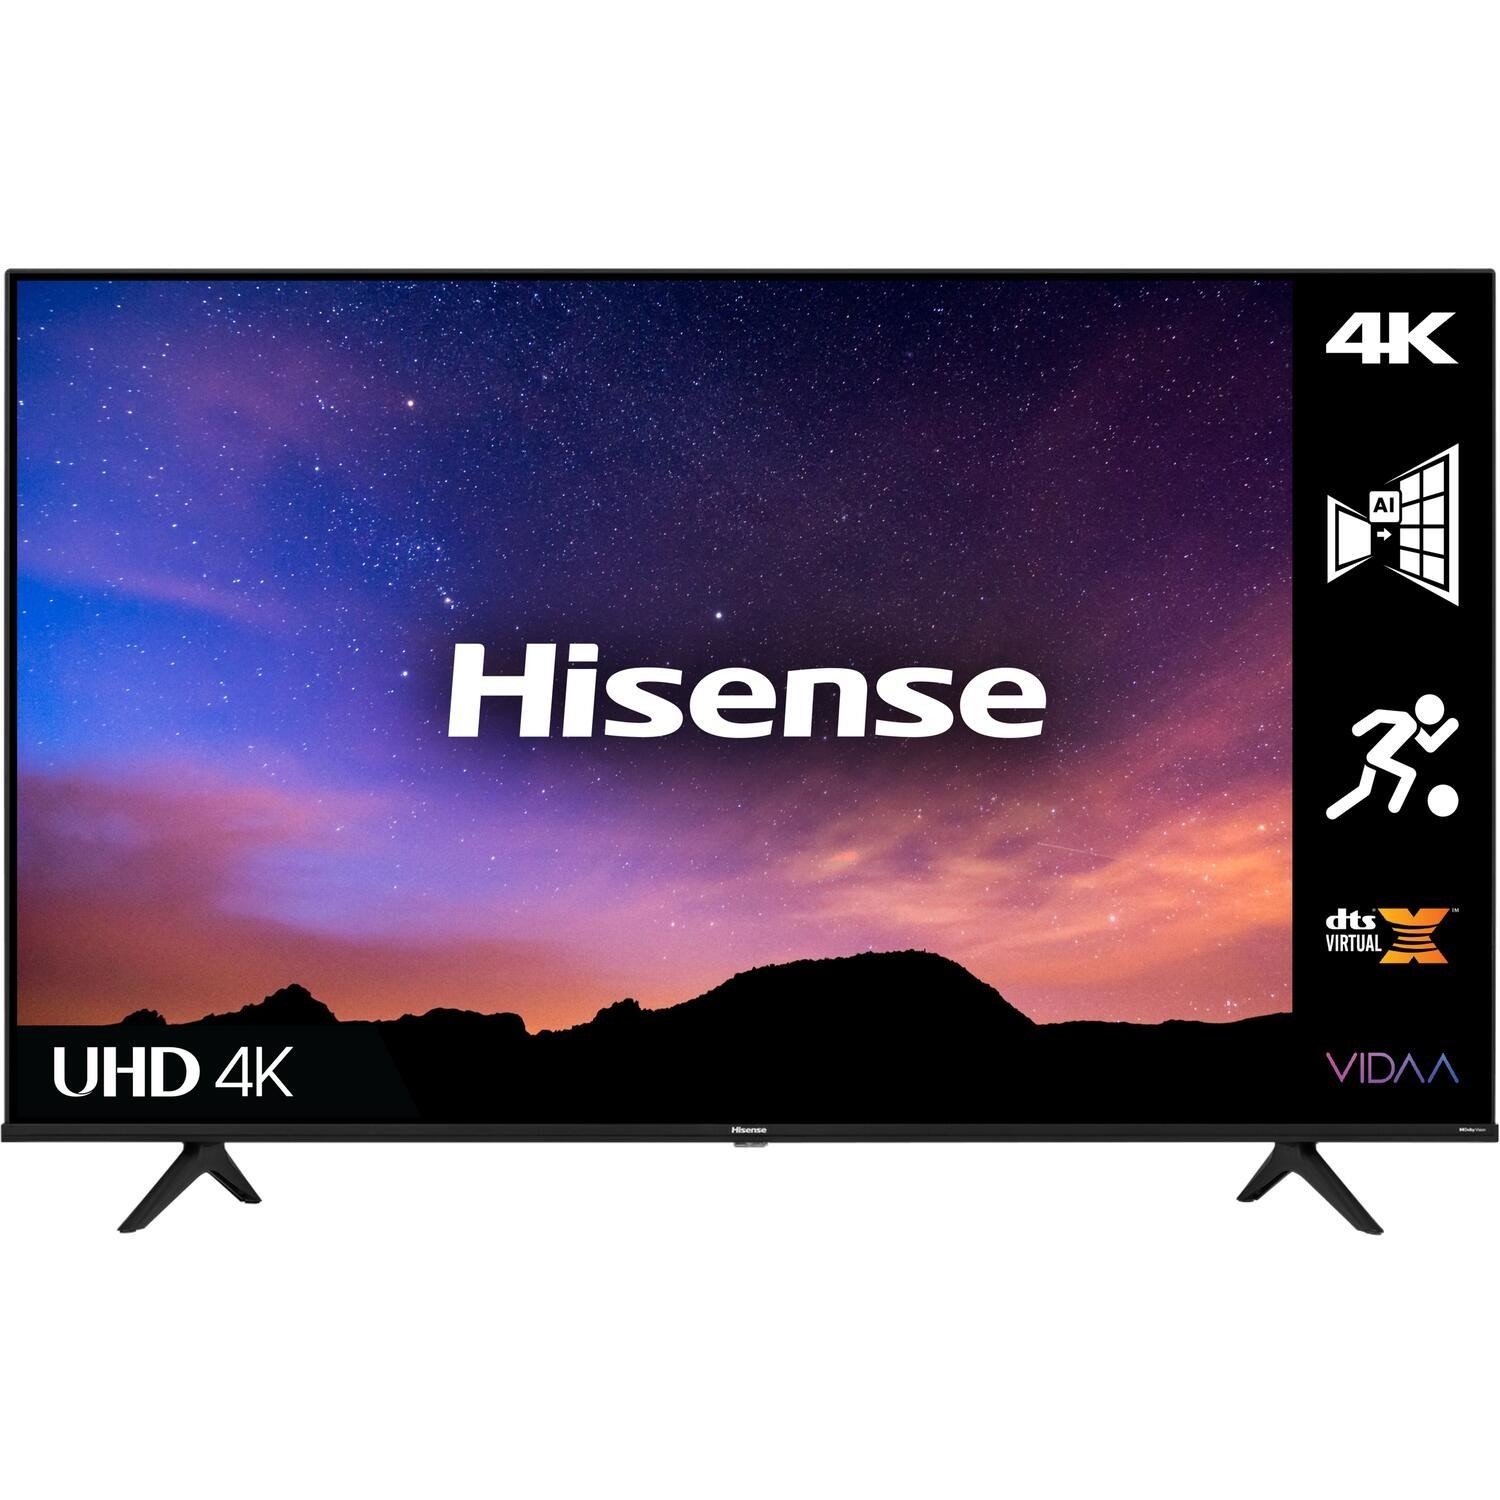 TV Hisense 43A6K UHD 4K Smart TV